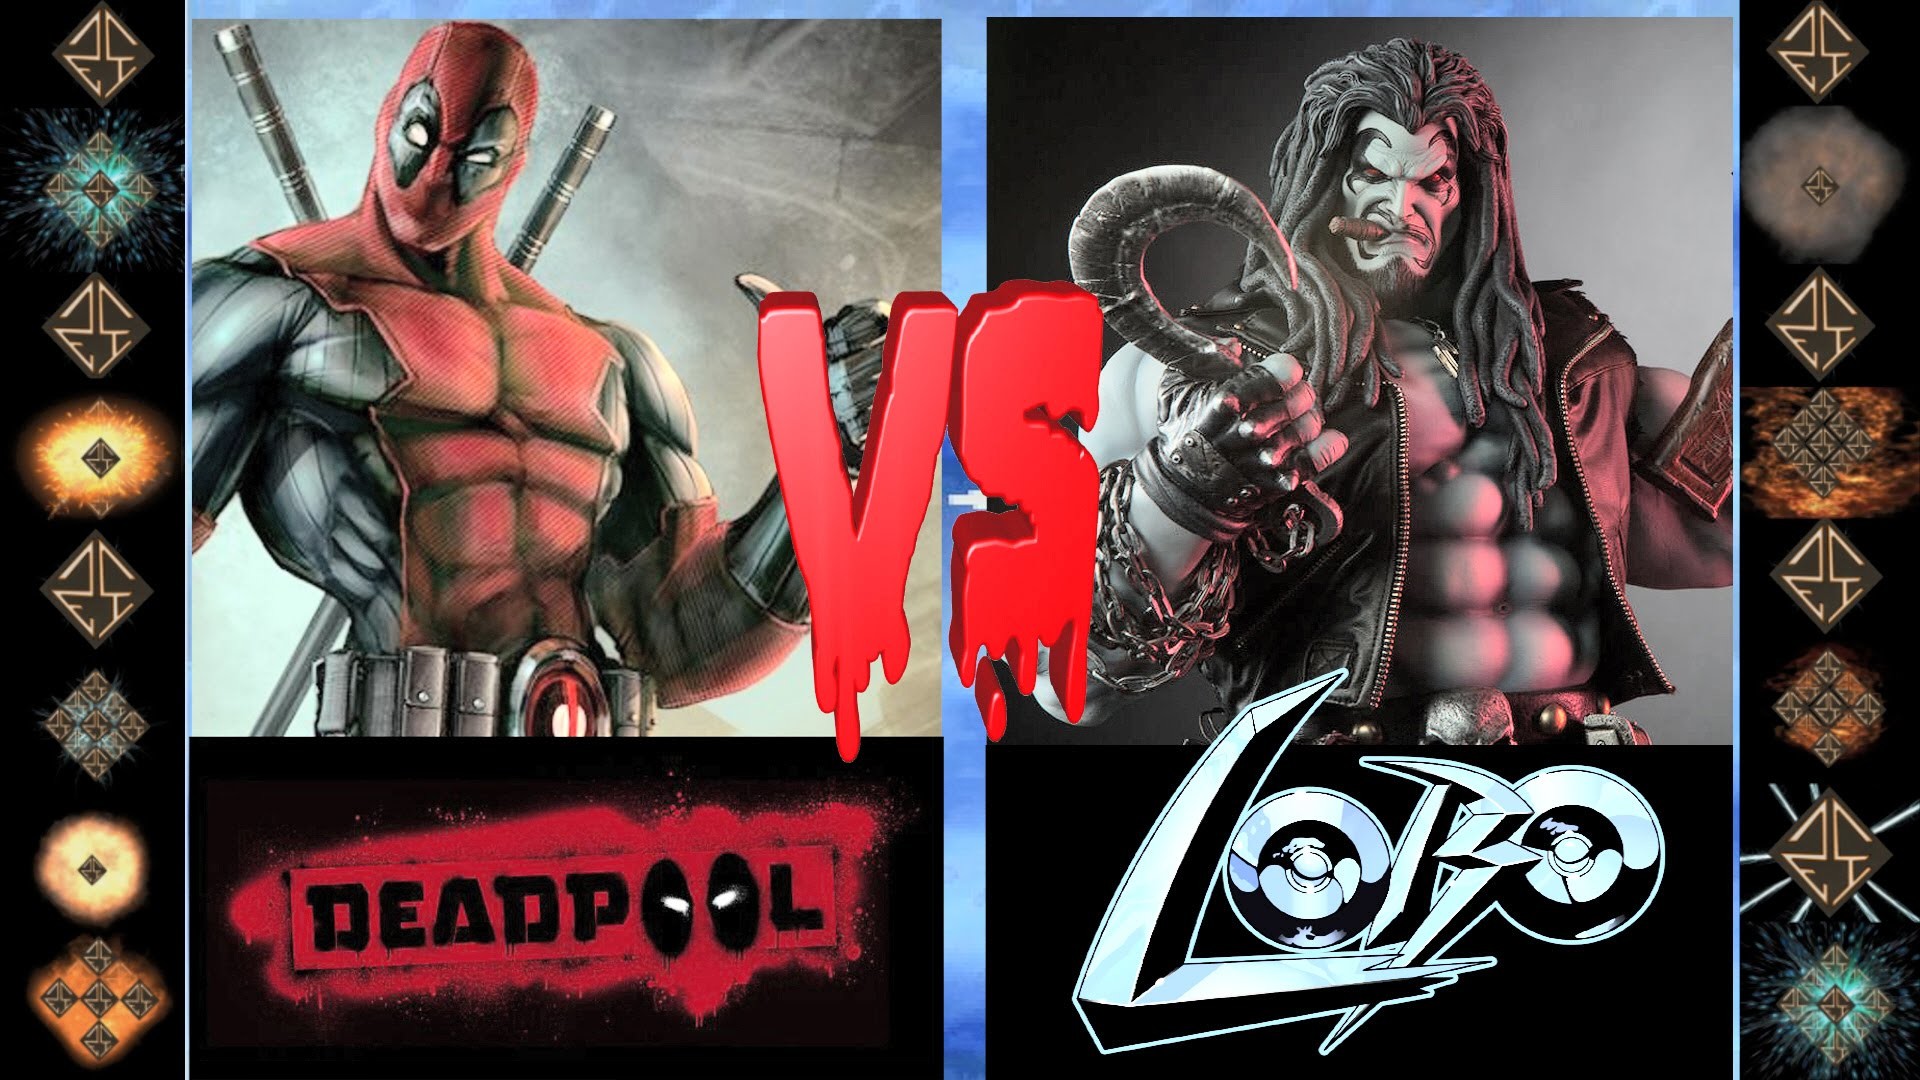 1920x1080 Deadpool (Marvel Comics) vs Lobo (DC Comics) - Ultimate Mugen Fight 2016